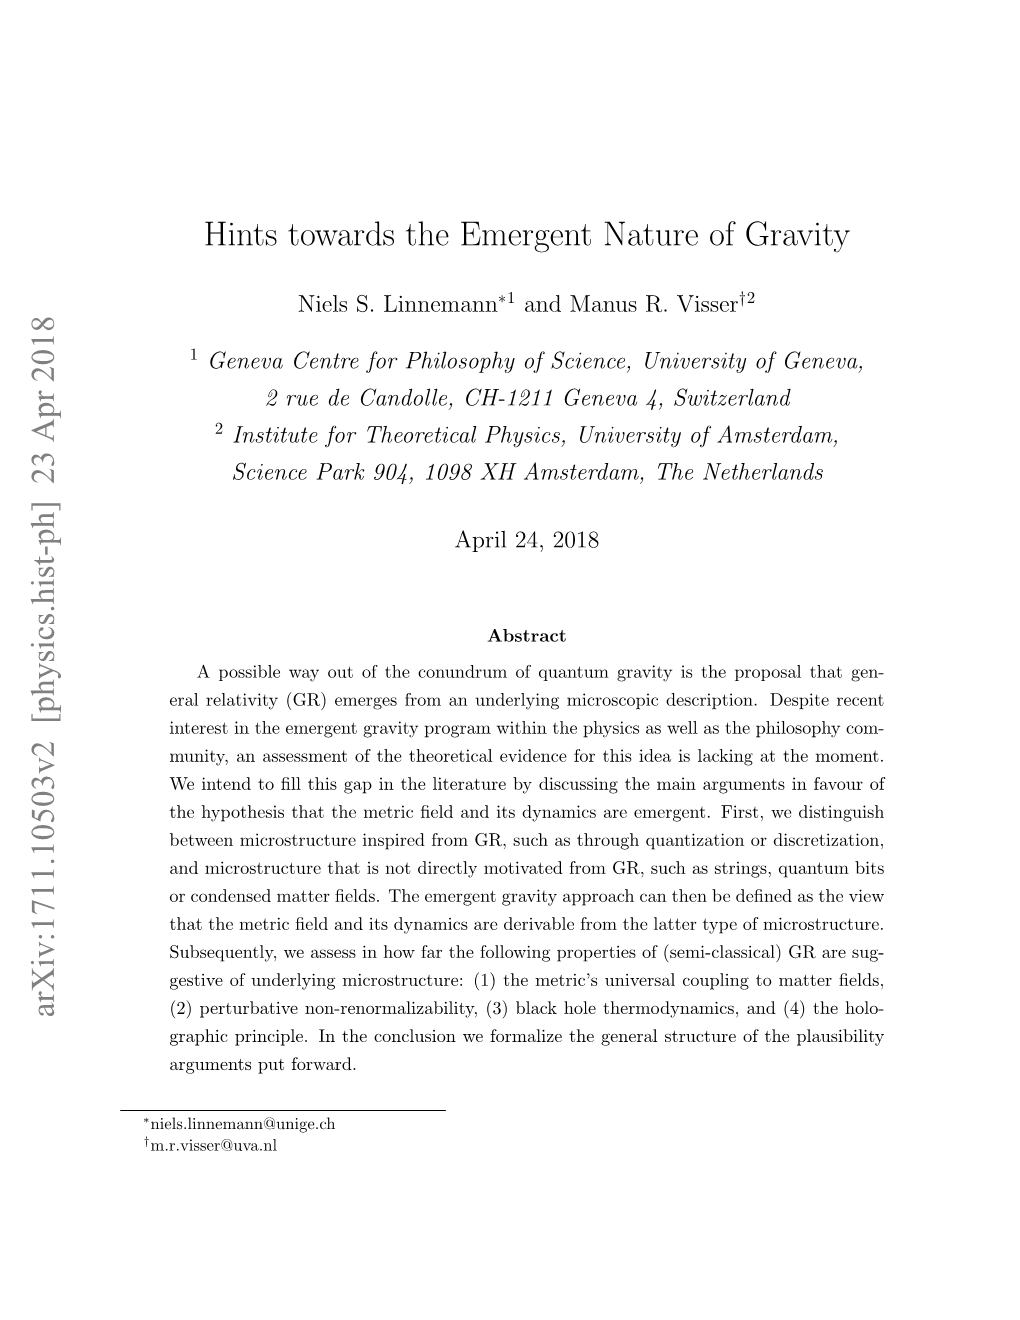 Hints Towards the Emergent Nature of Gravity Arxiv:1711.10503V2